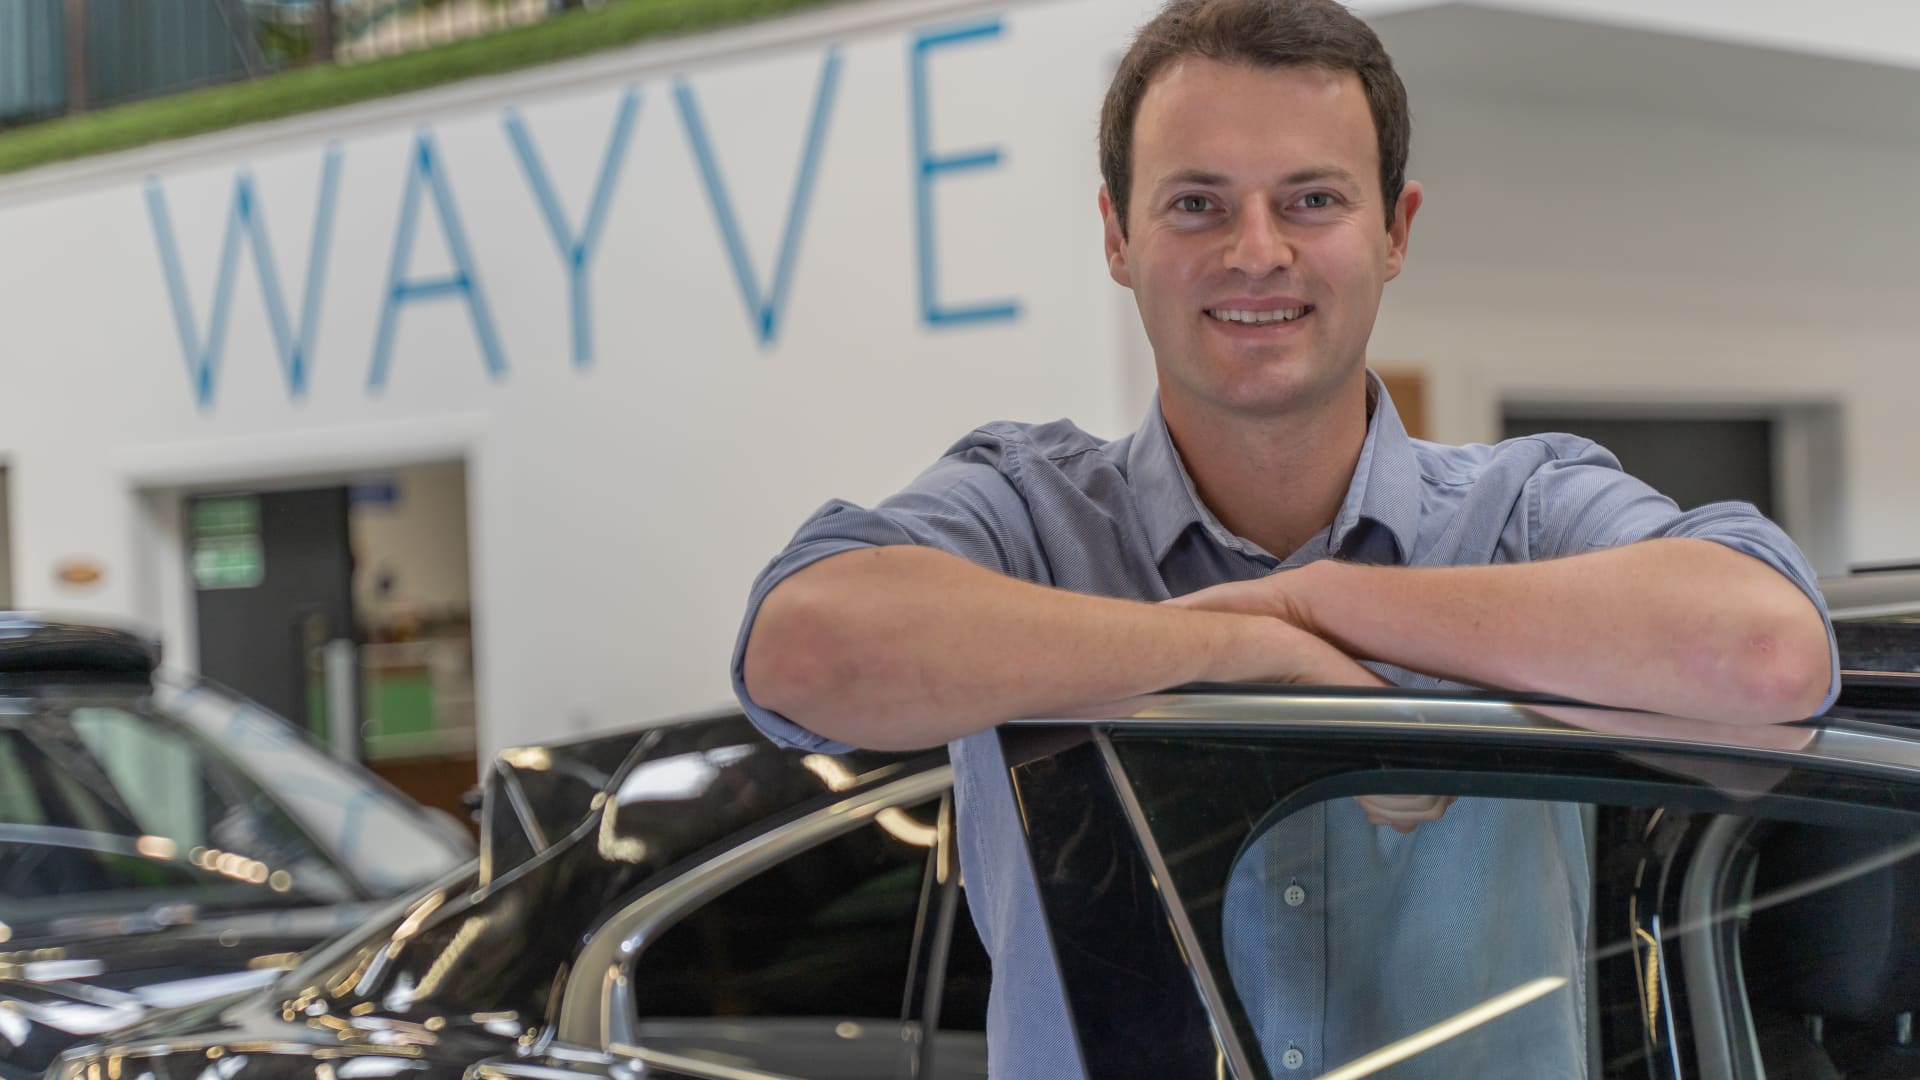 Wayve just raised over $1 billion from Nvidia, SoftBank, Microsoft, Eclipse Ventures